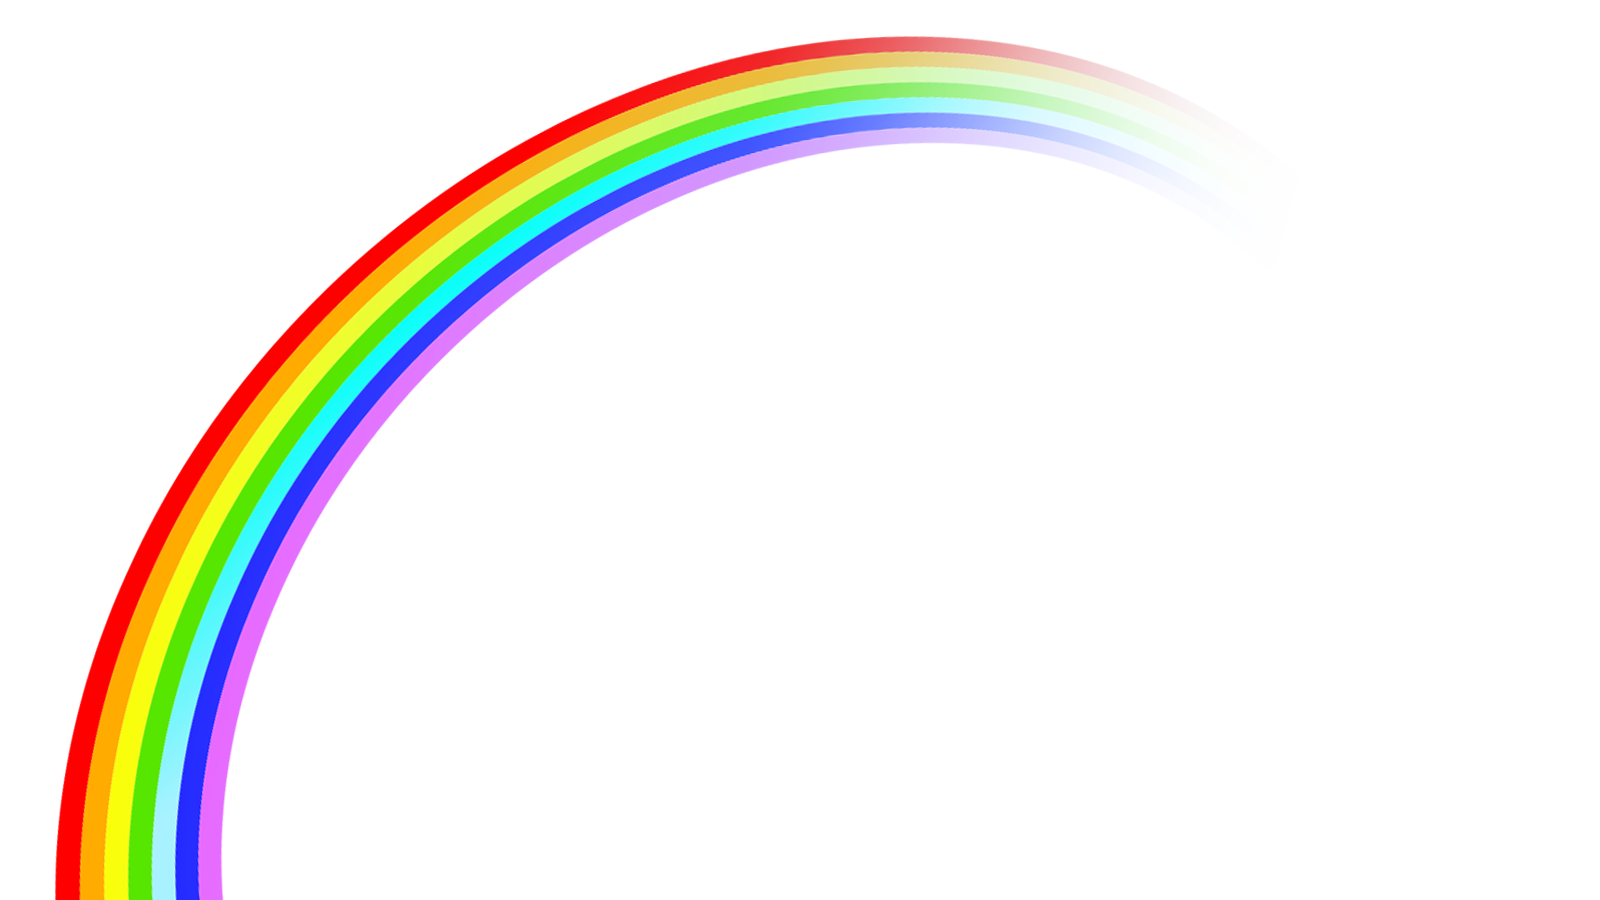 Free vector graphic: Rainbow,